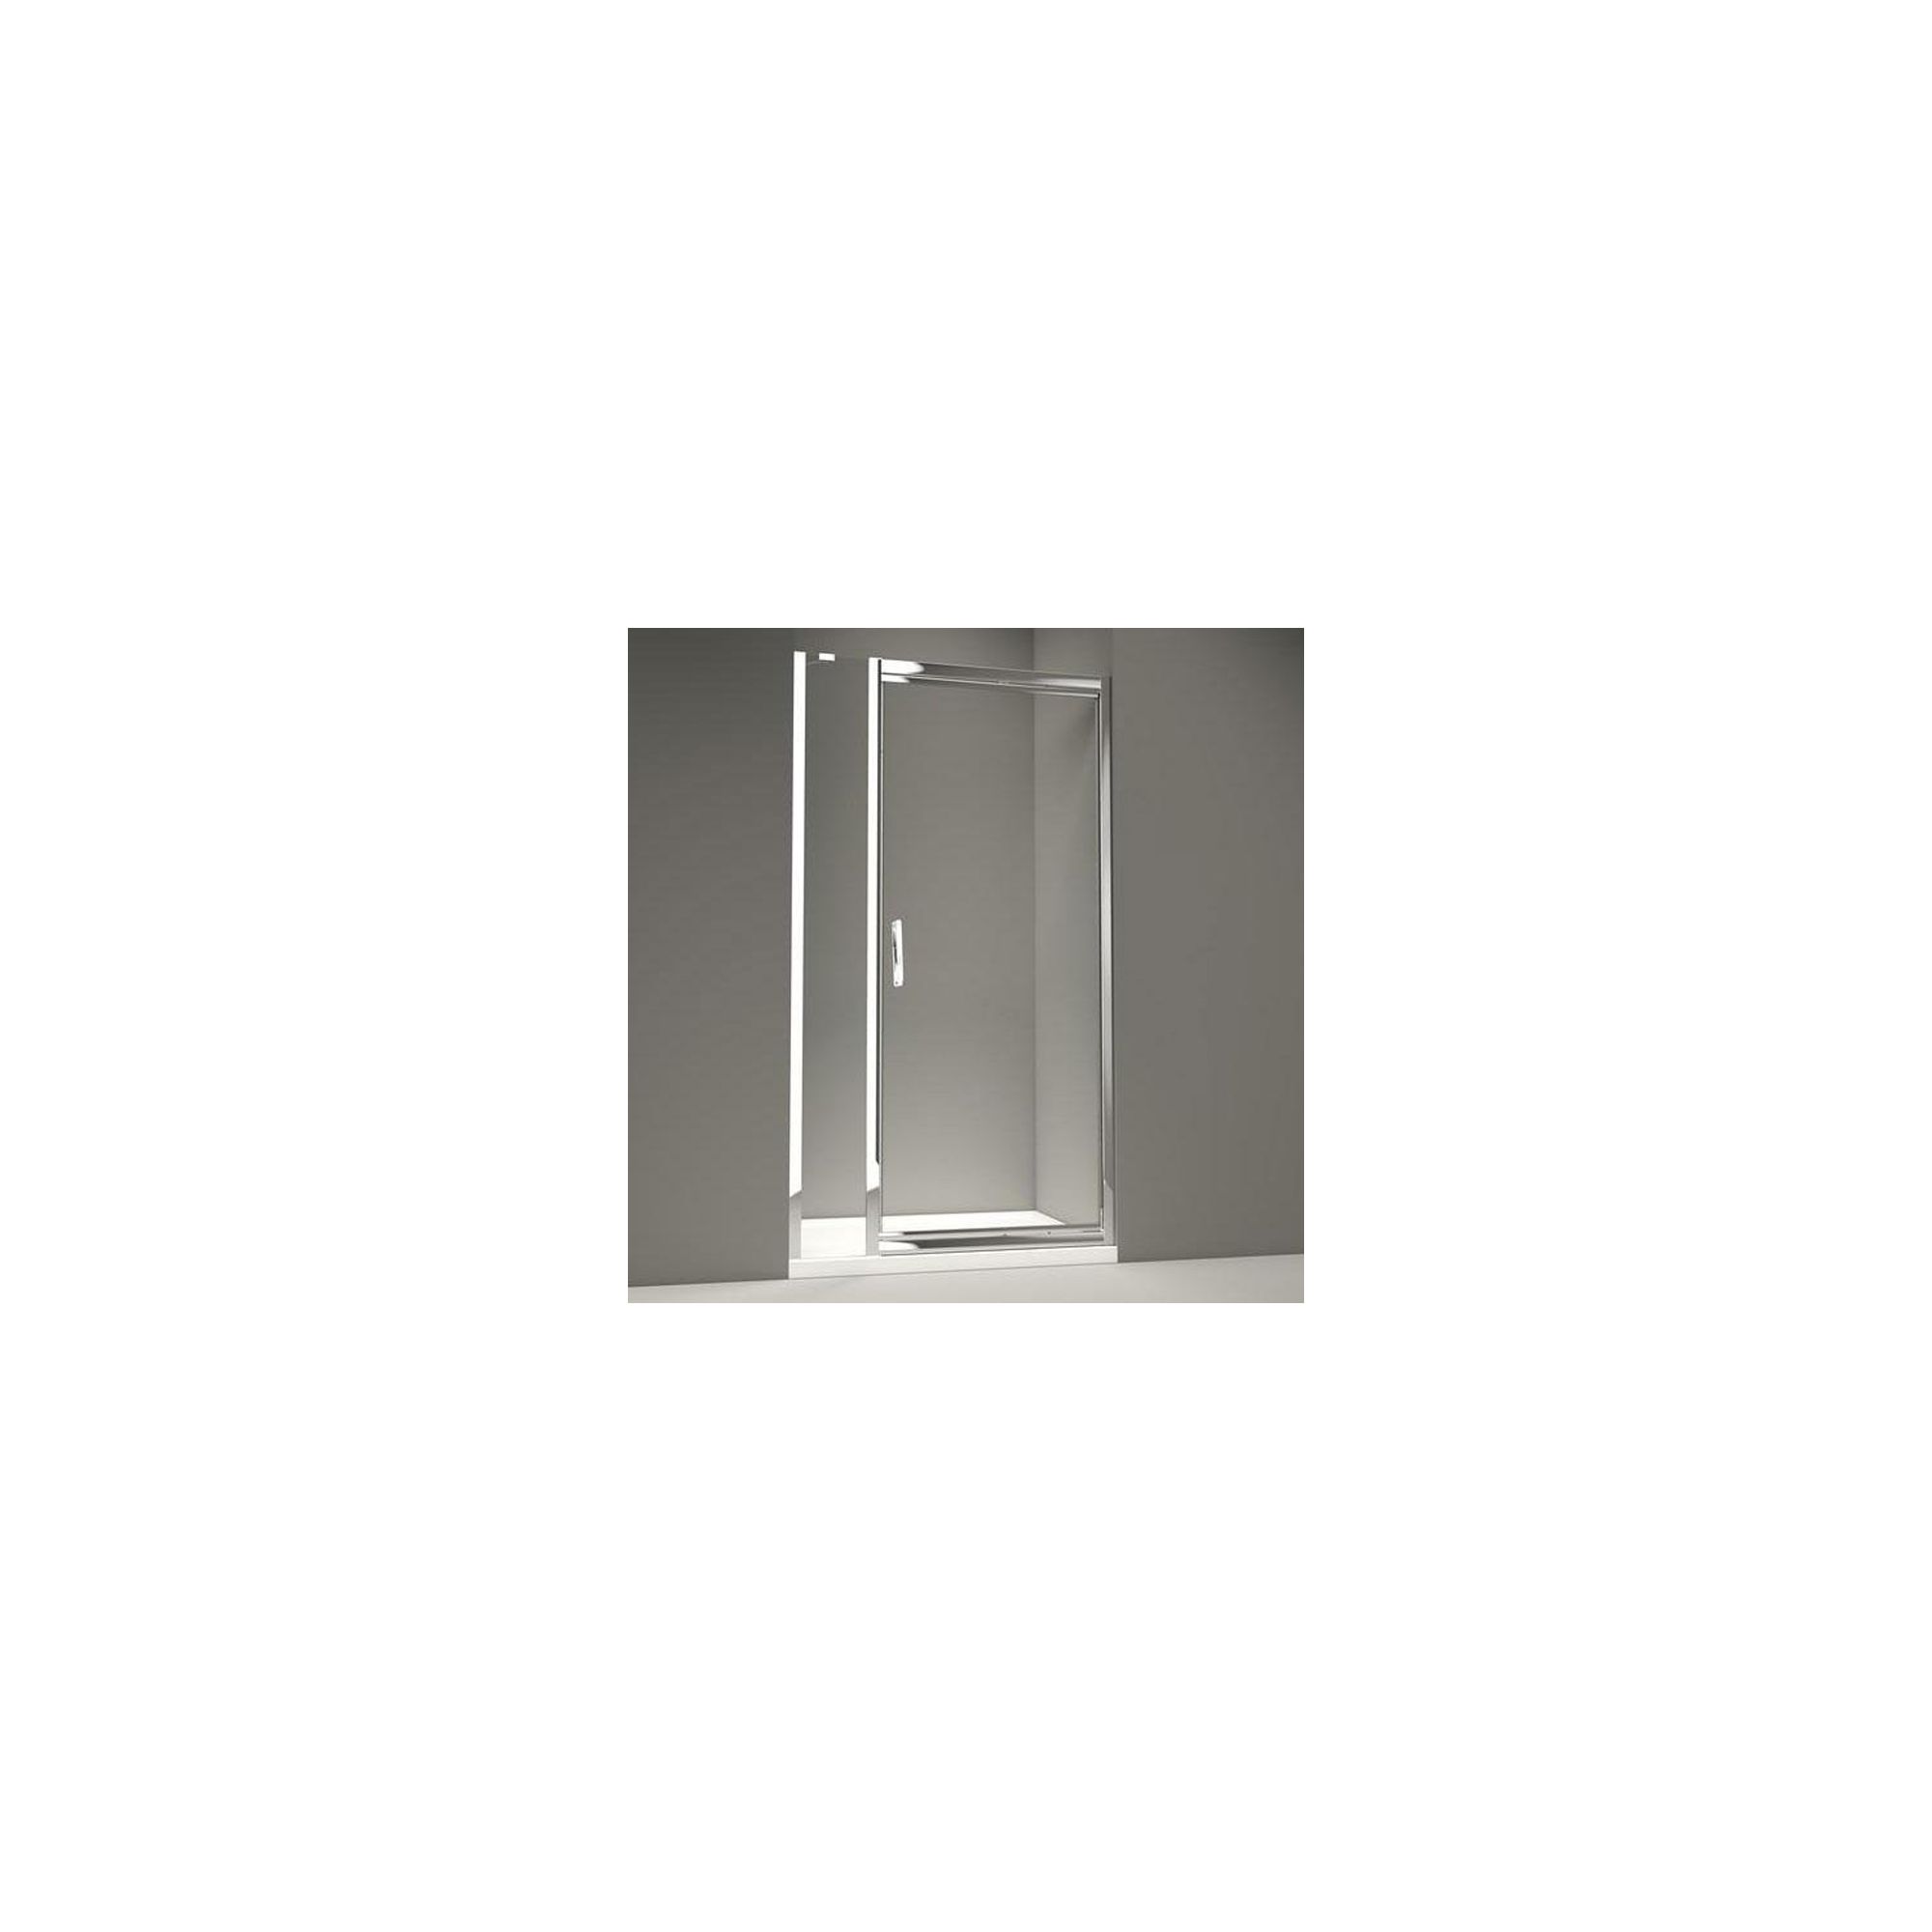 Merlyn Series 8 Inline Infold Shower Door, 1100mm Wide, Chrome Frame, 8mm Glass at Tesco Direct